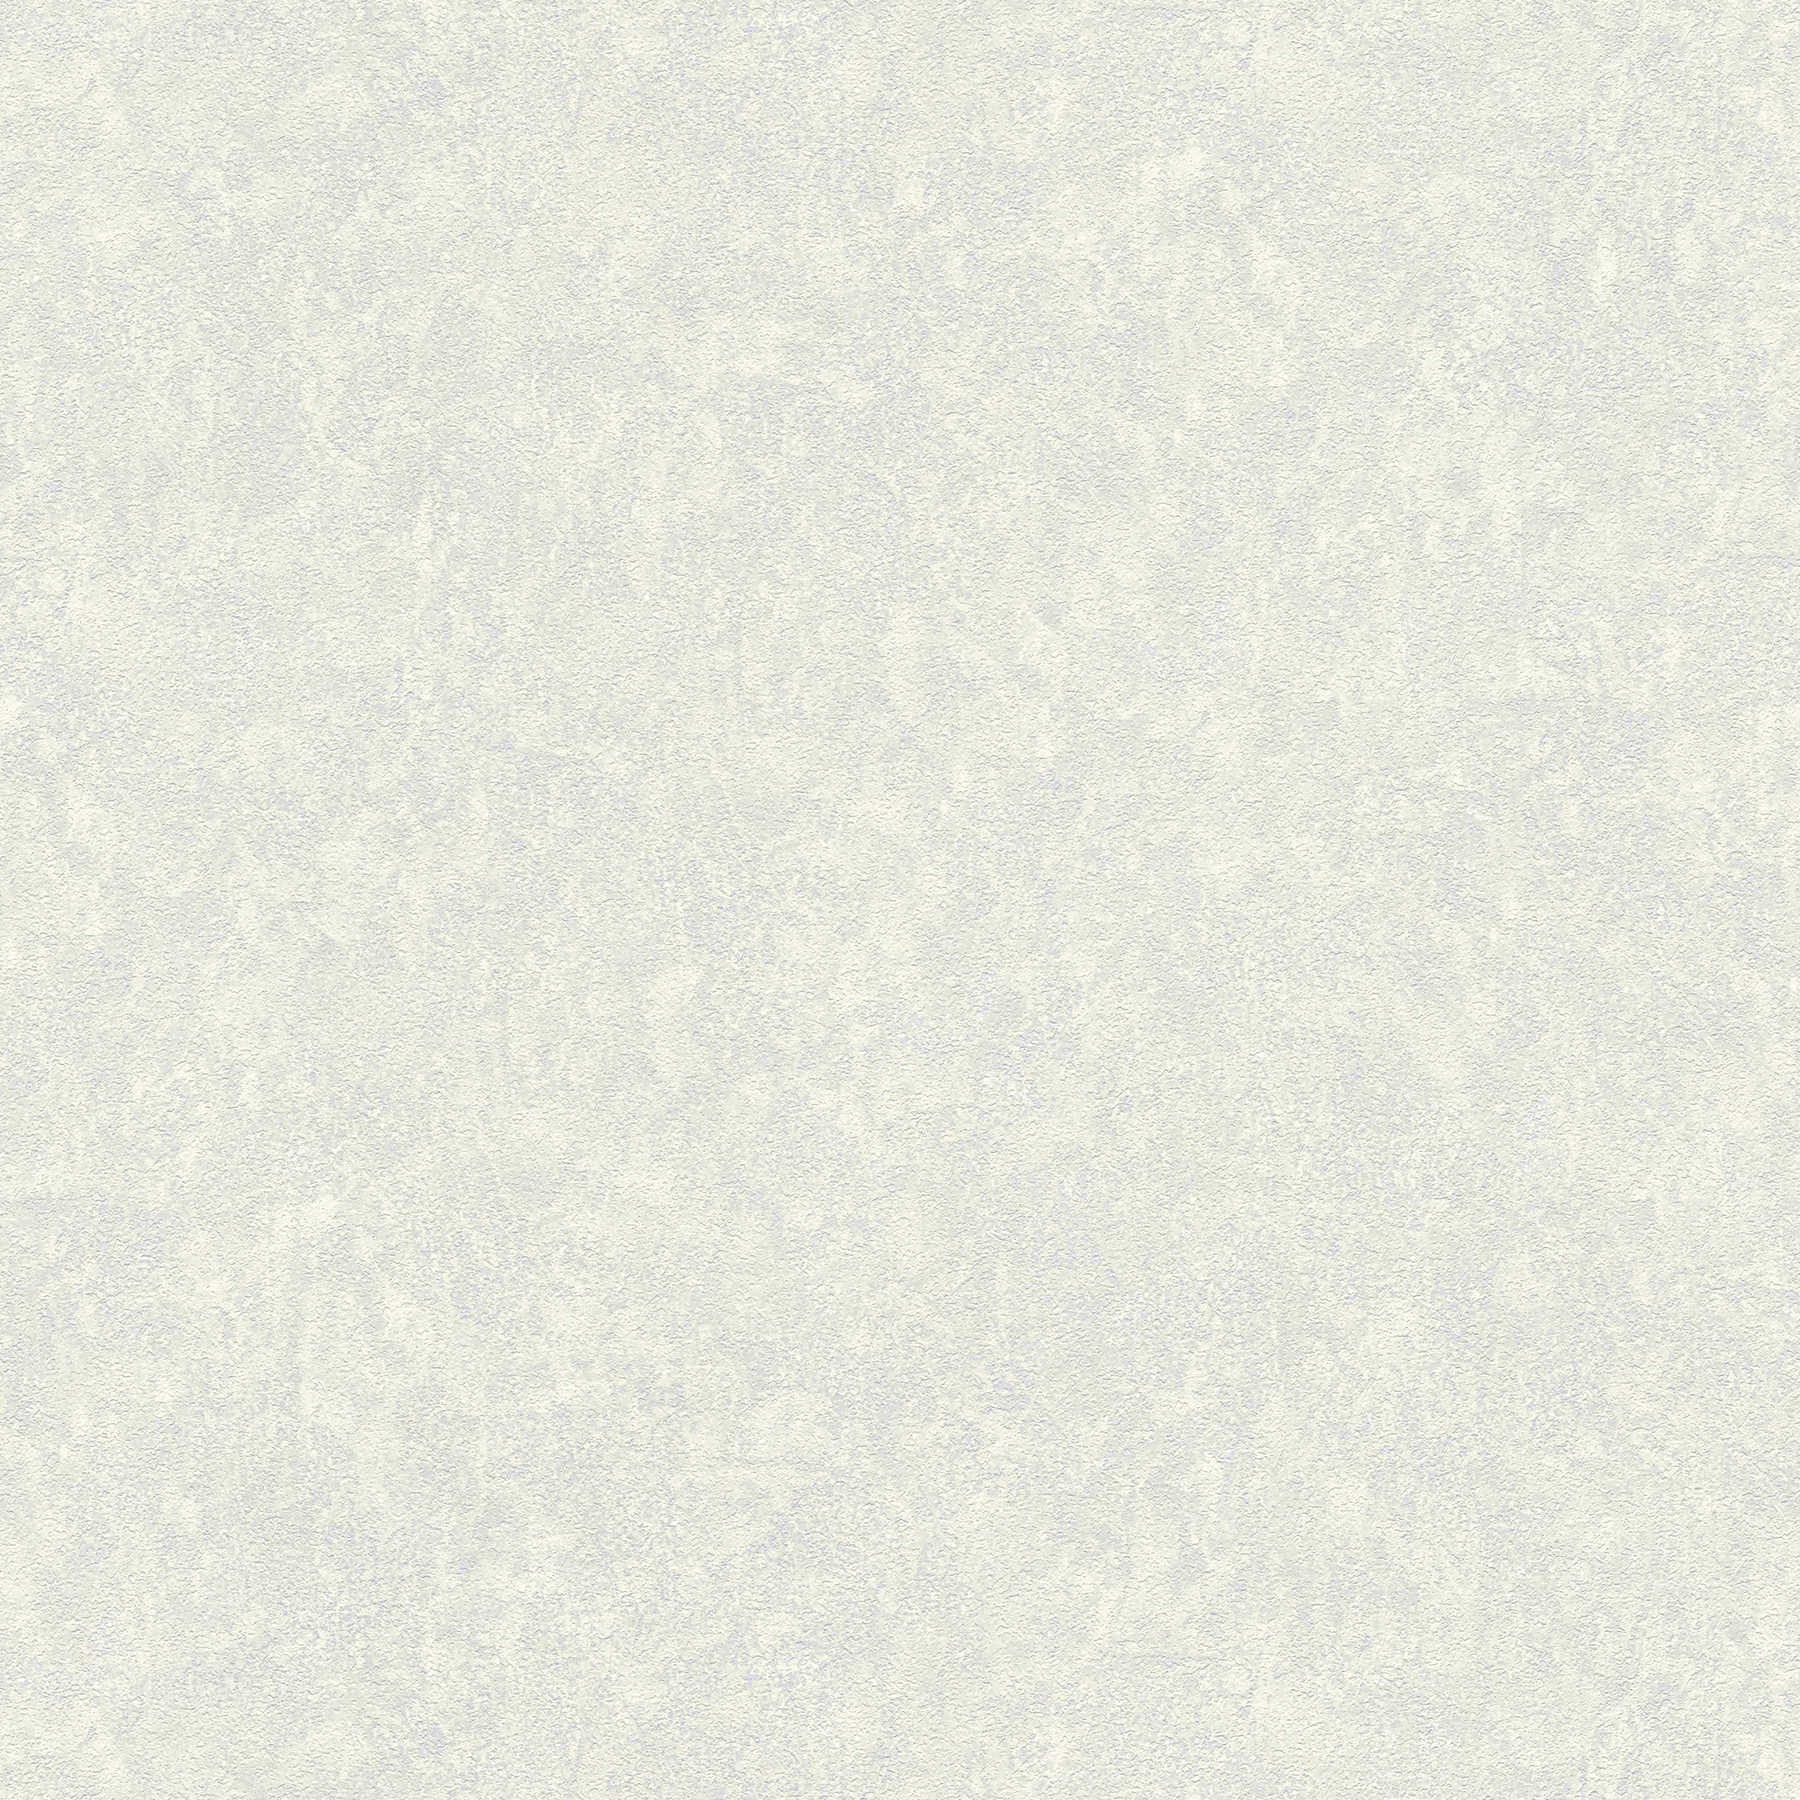 Tapete Wandputz-Optik mit Struktureffekt & melierter Farbe – Grau
